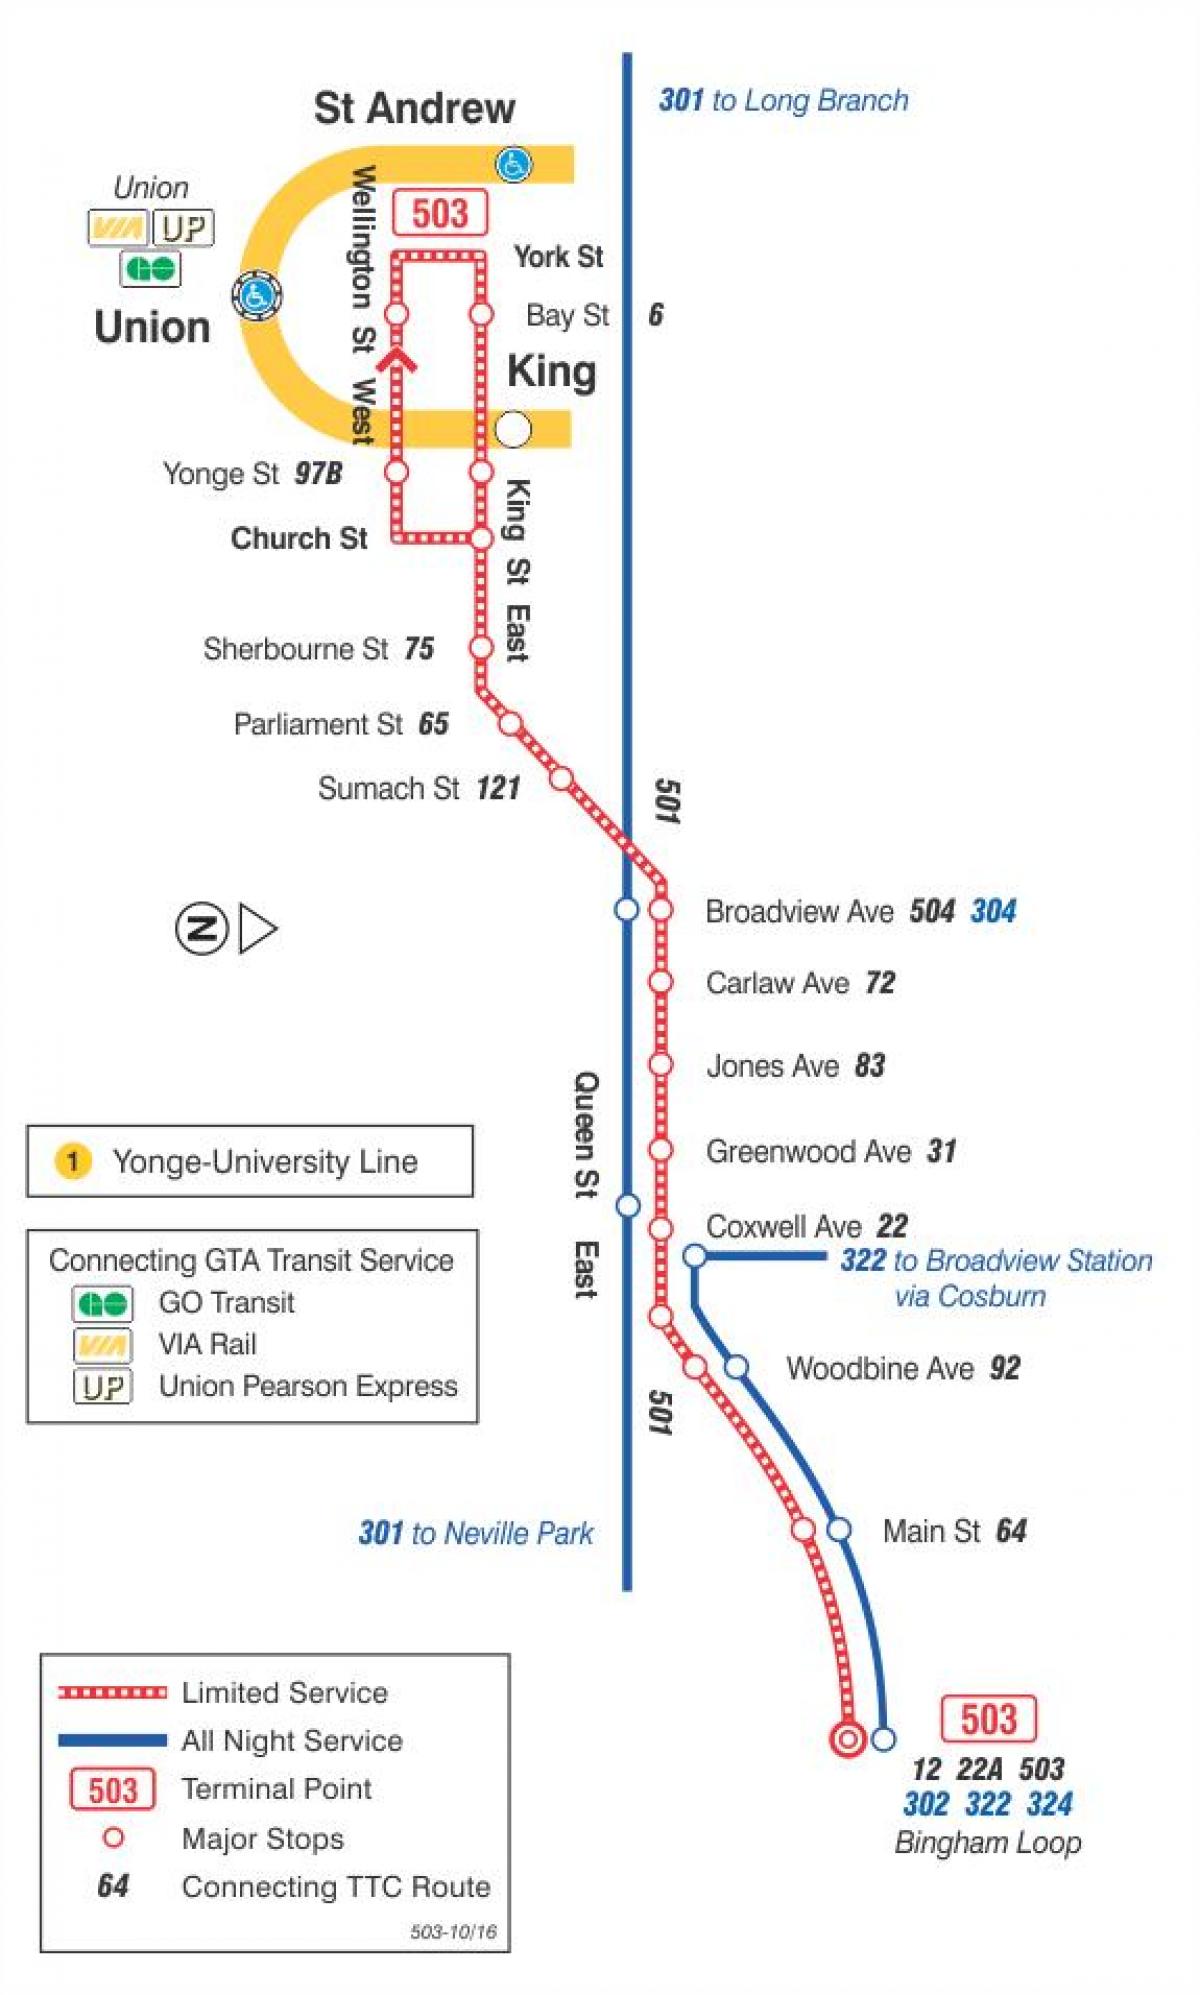 Քարտեզ трамвайную գիծ 503 Kingston Ճանապարհը